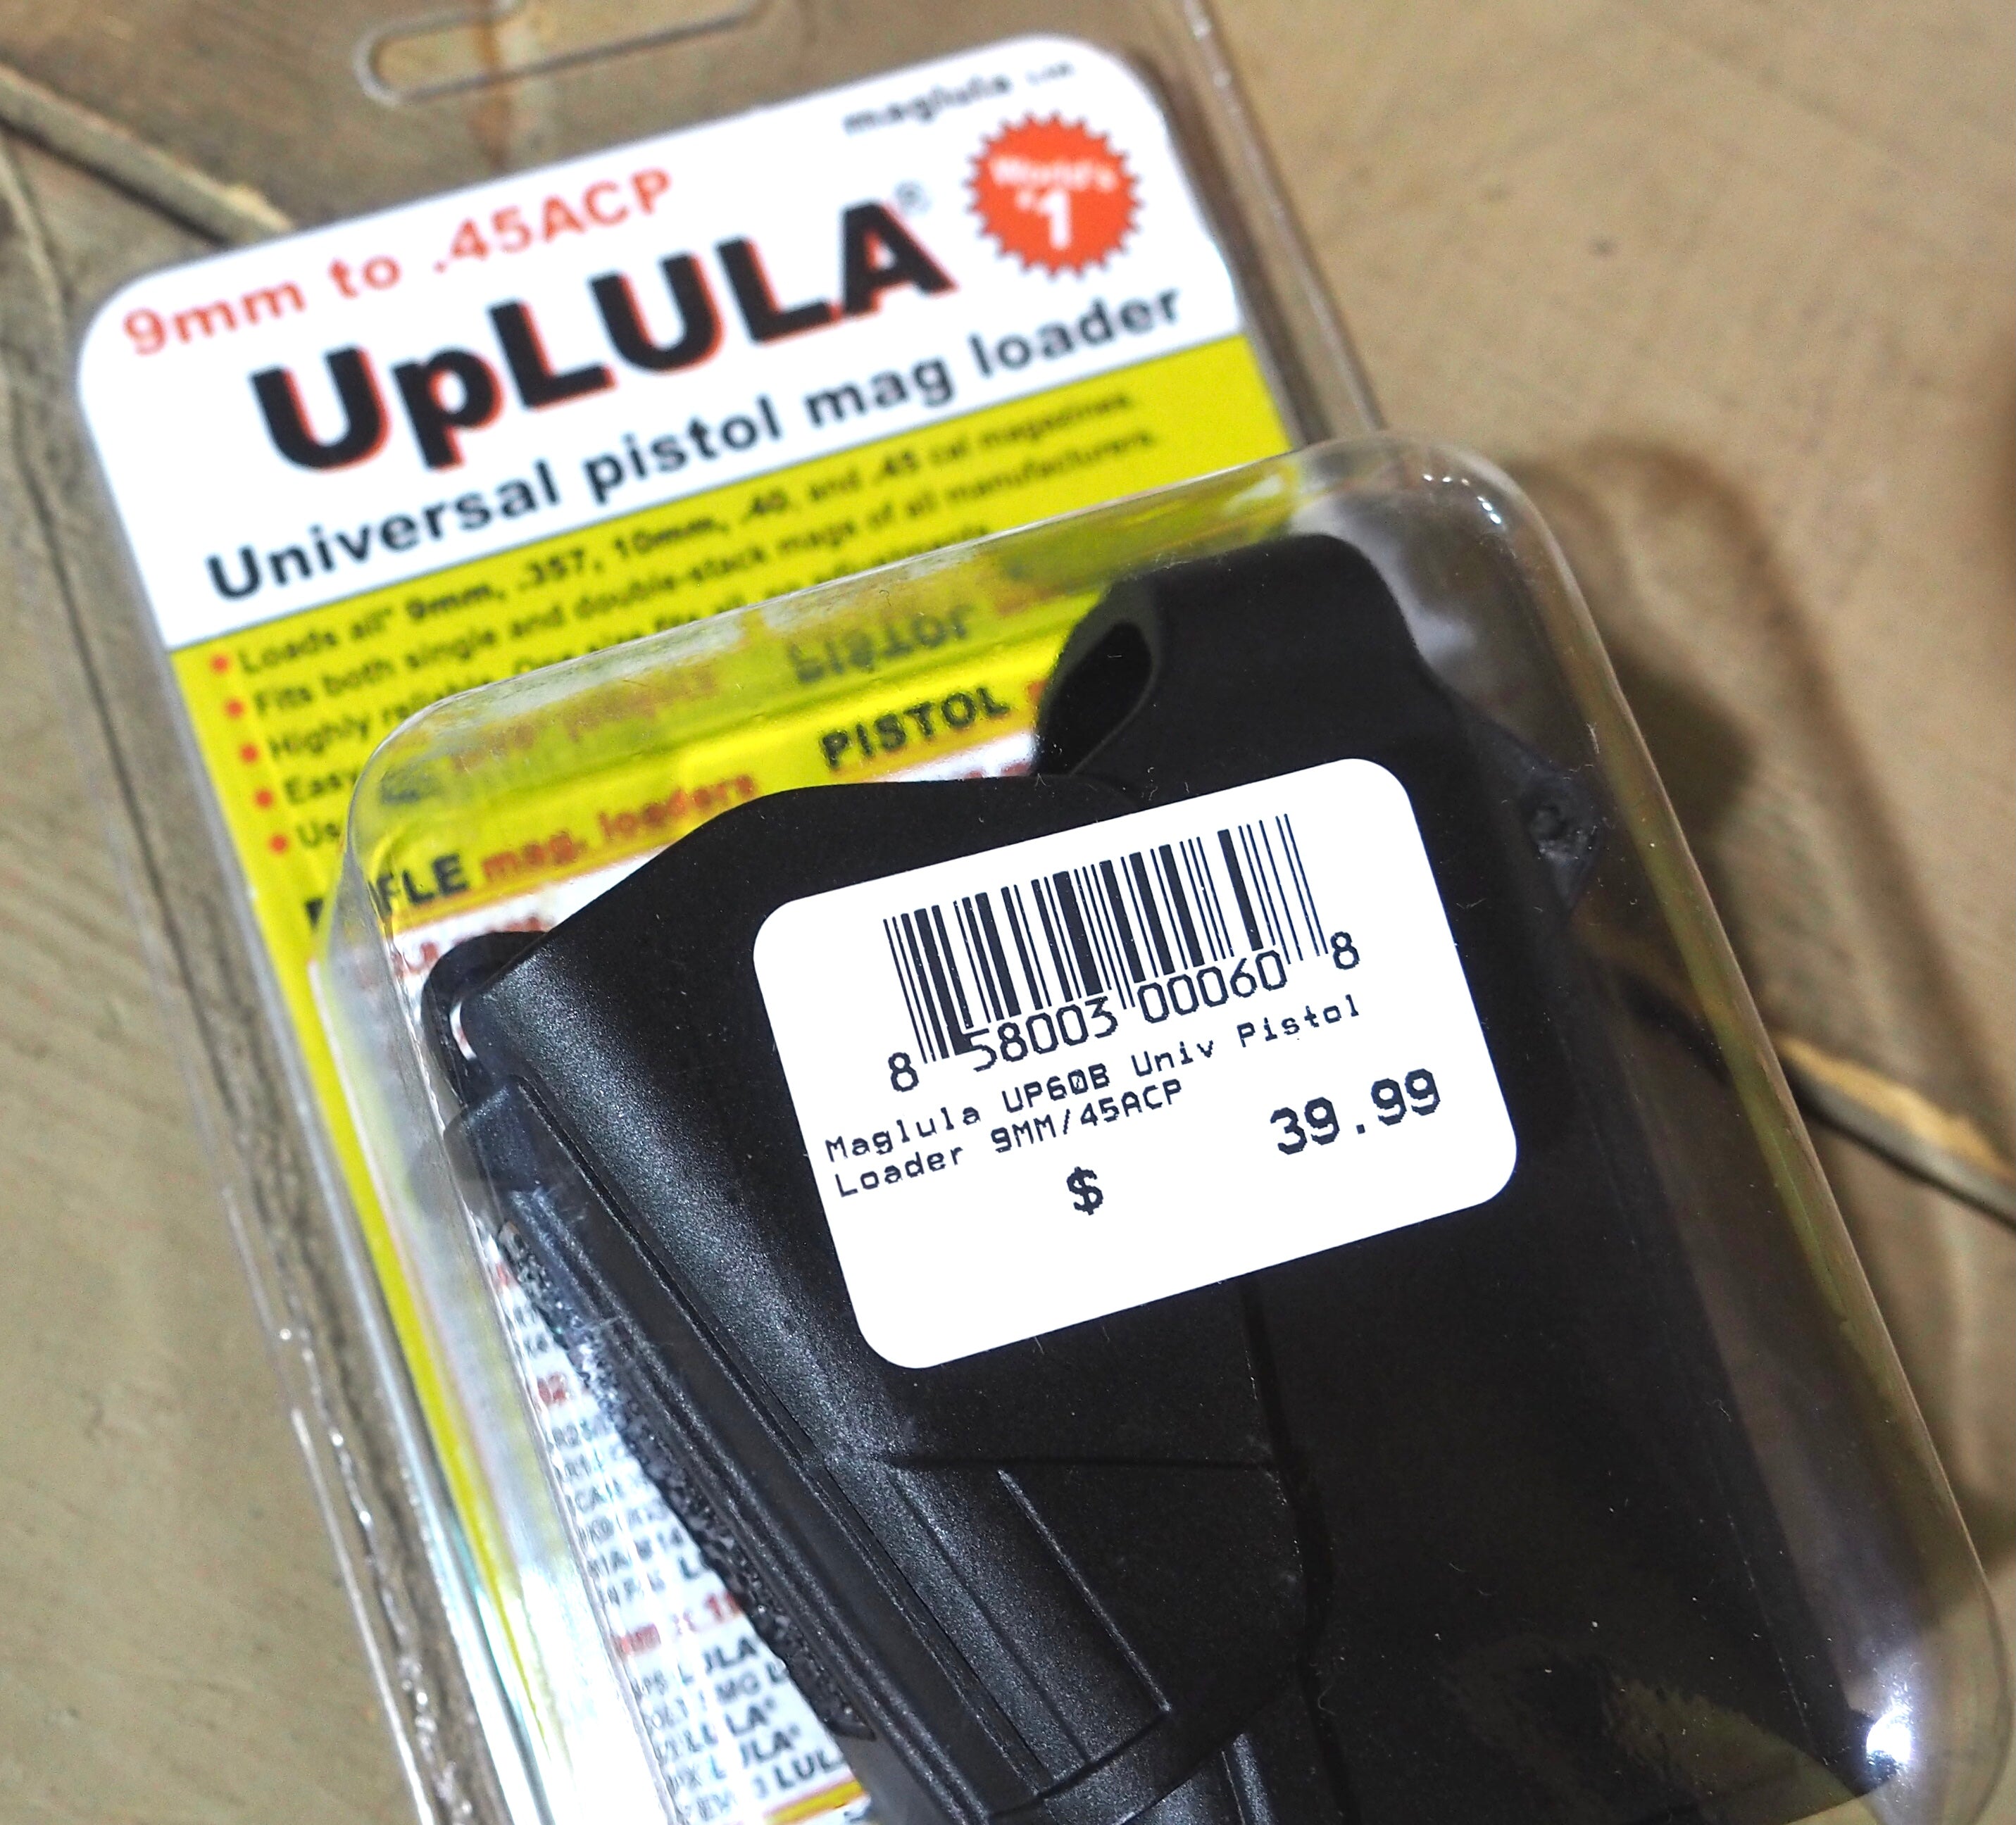 UpLULA Universal Pistol Magazine Loader